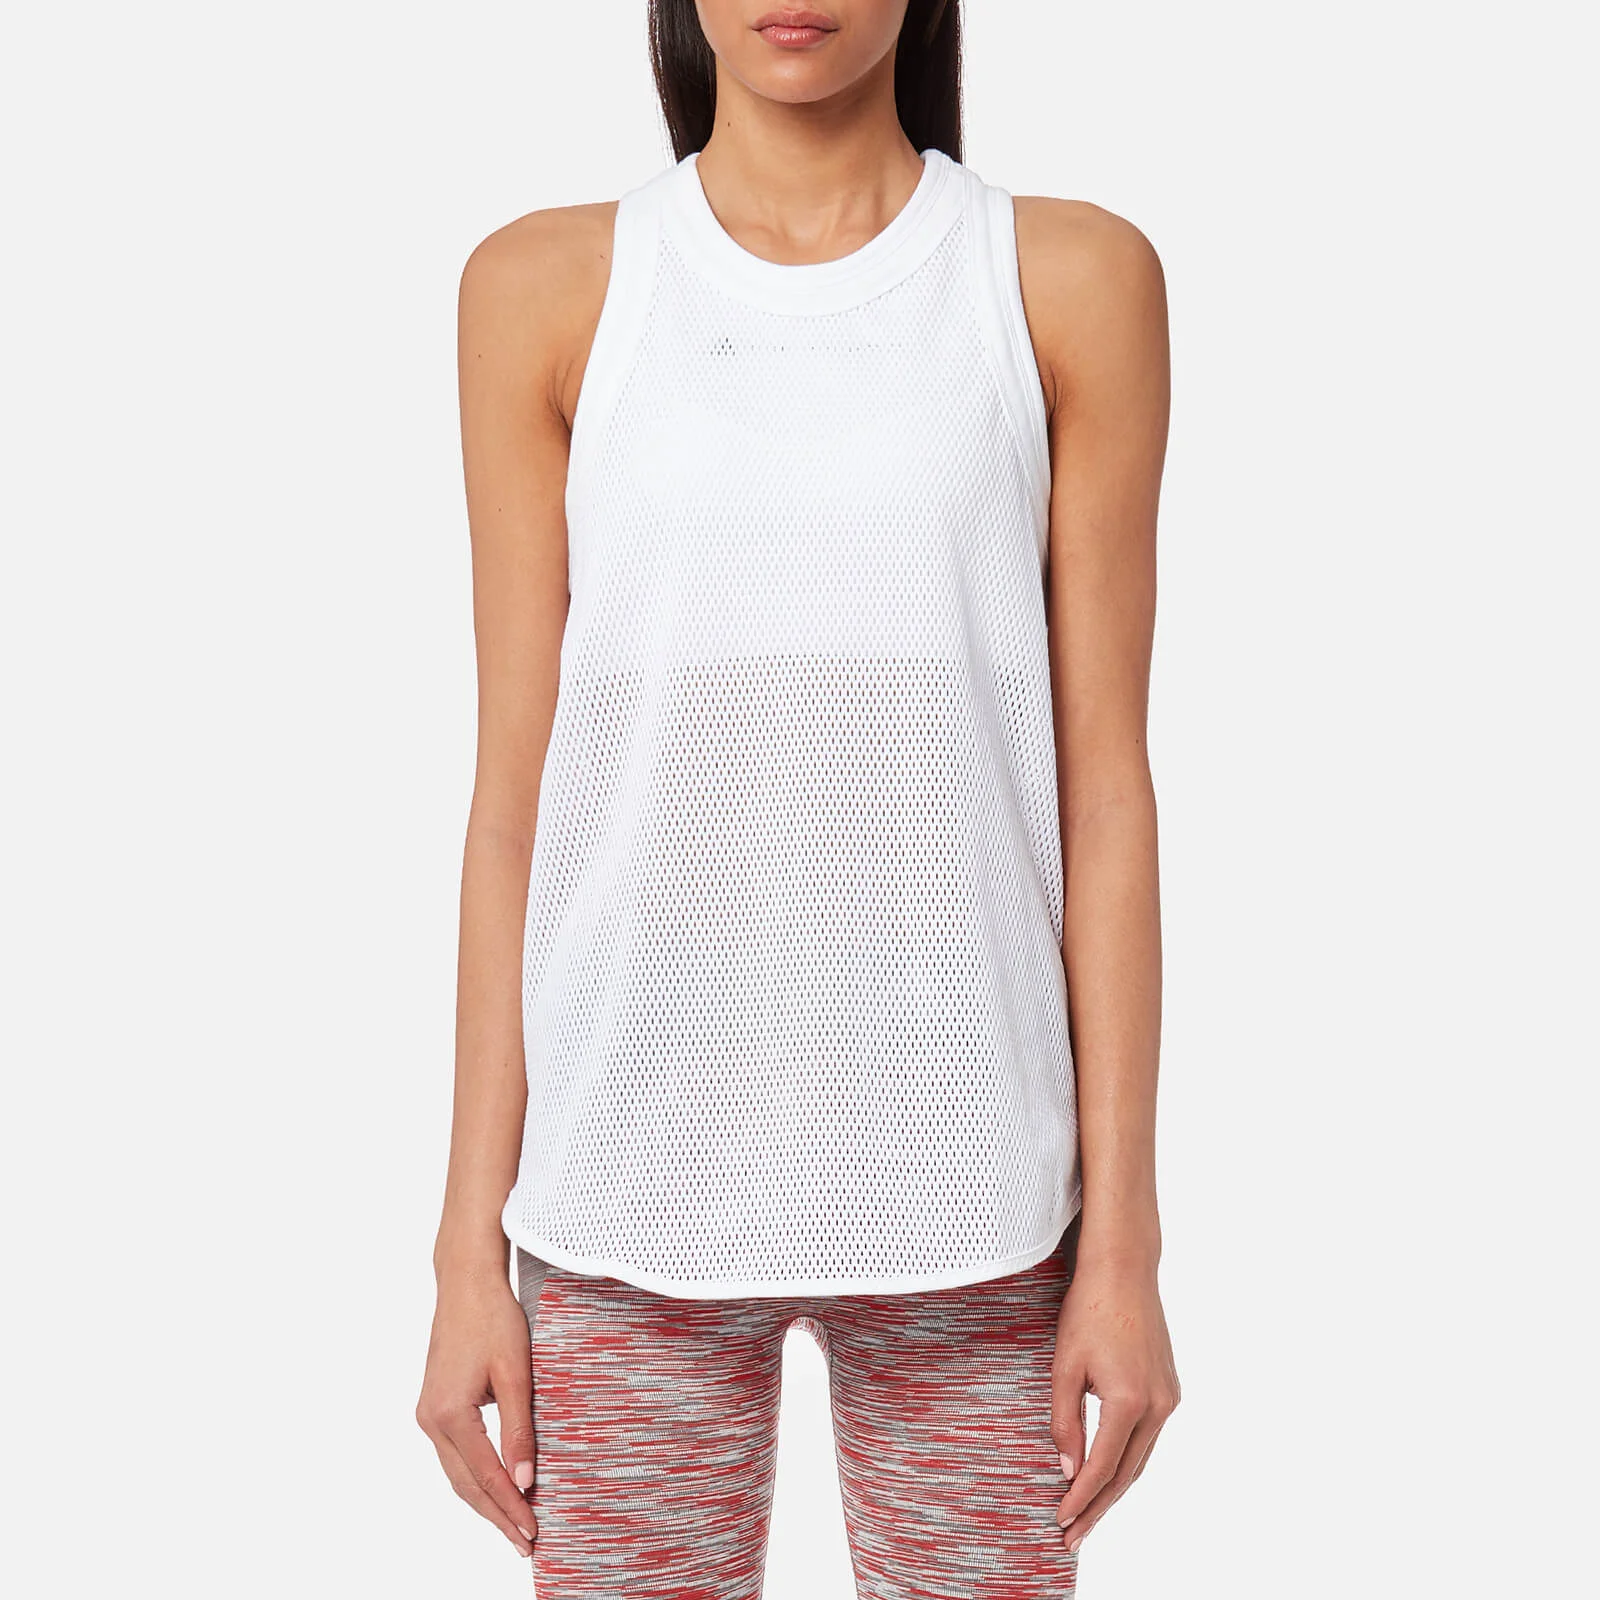 adidas by Stella McCartney Women's Yoga Mesh Tank Top - White Image 1